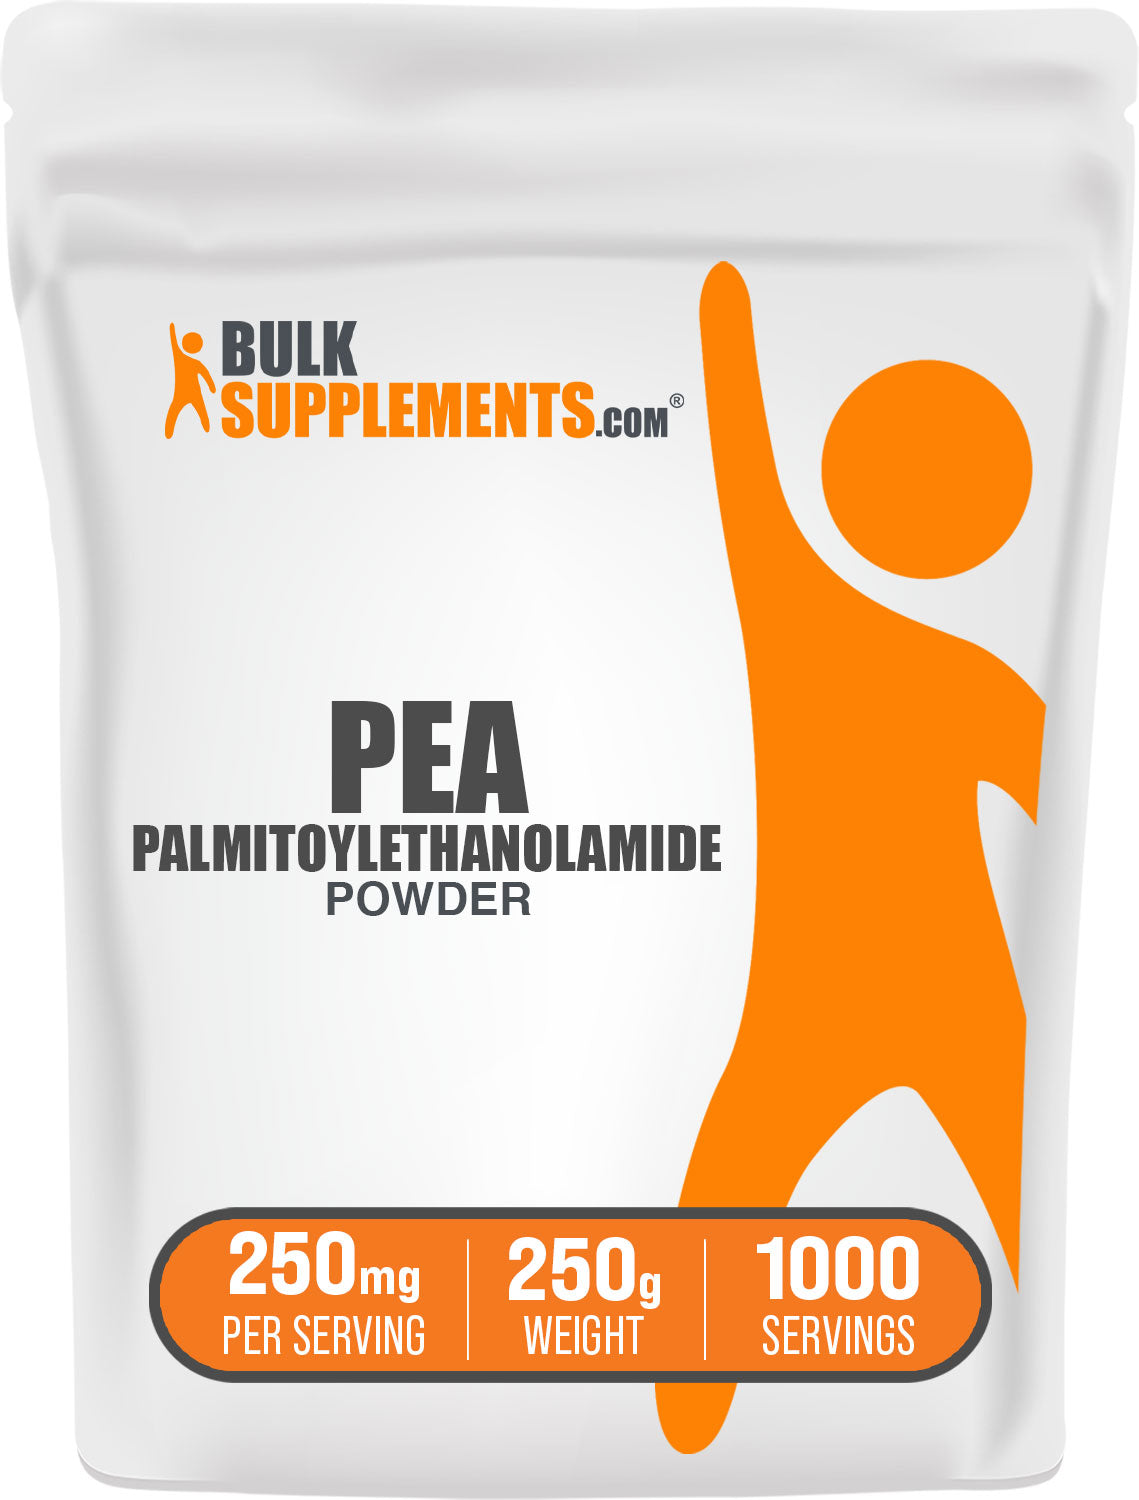 BulkSupplements.com Palmitoylethanolamide (PEA) Powder 250g bag